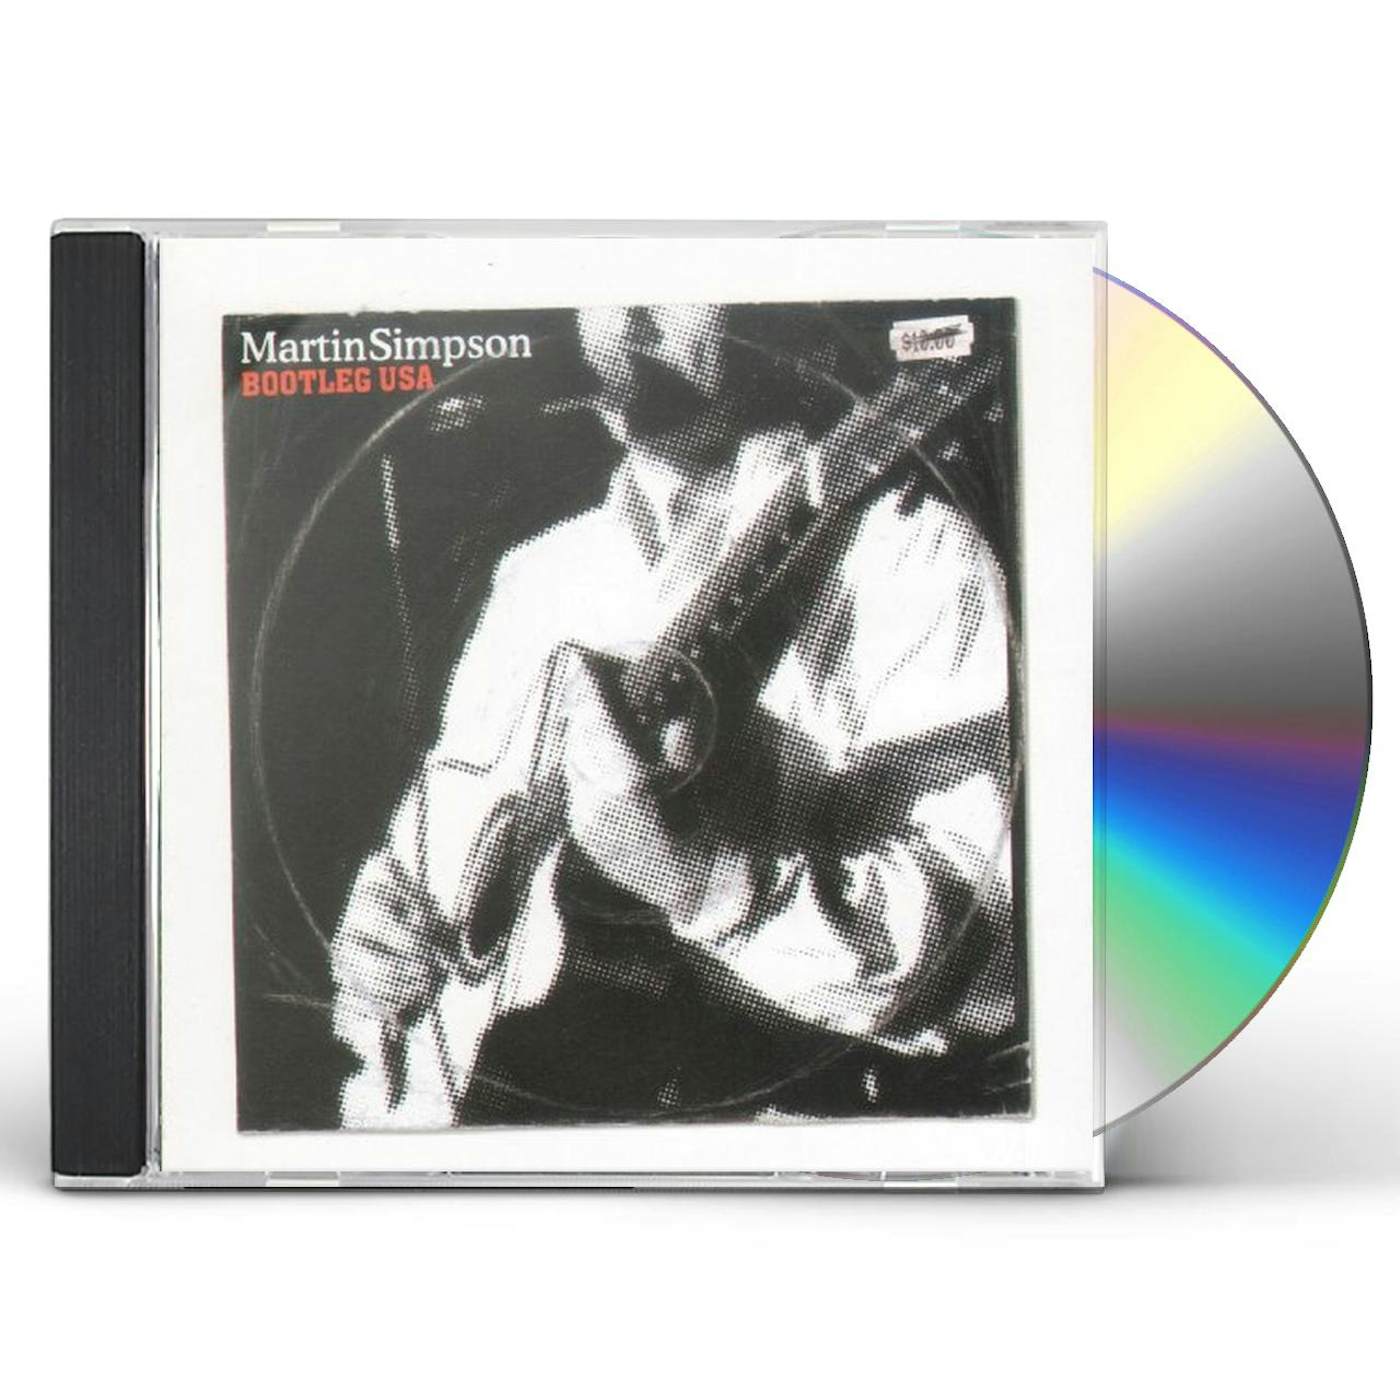 Martin Simpson BOOTLEG USA CD